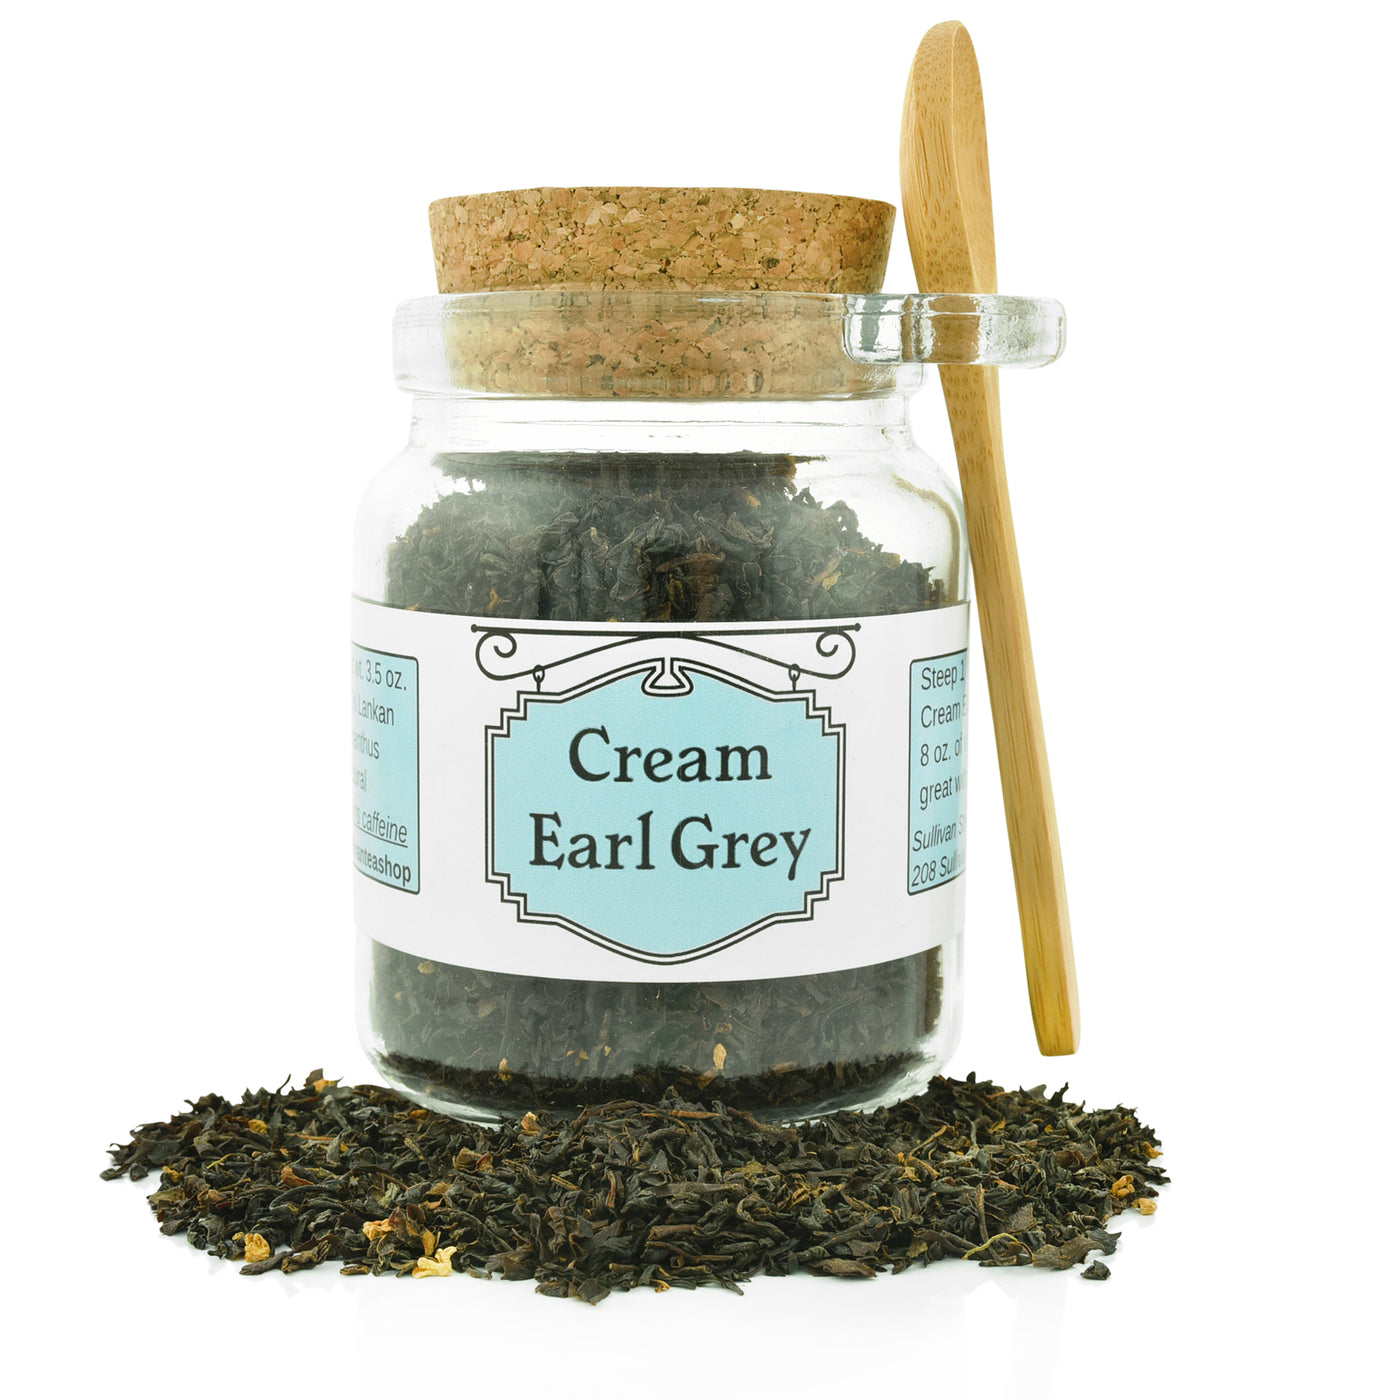 Cream Earl Grey Gift Jar - Sullivan Street Tea & Spice Company